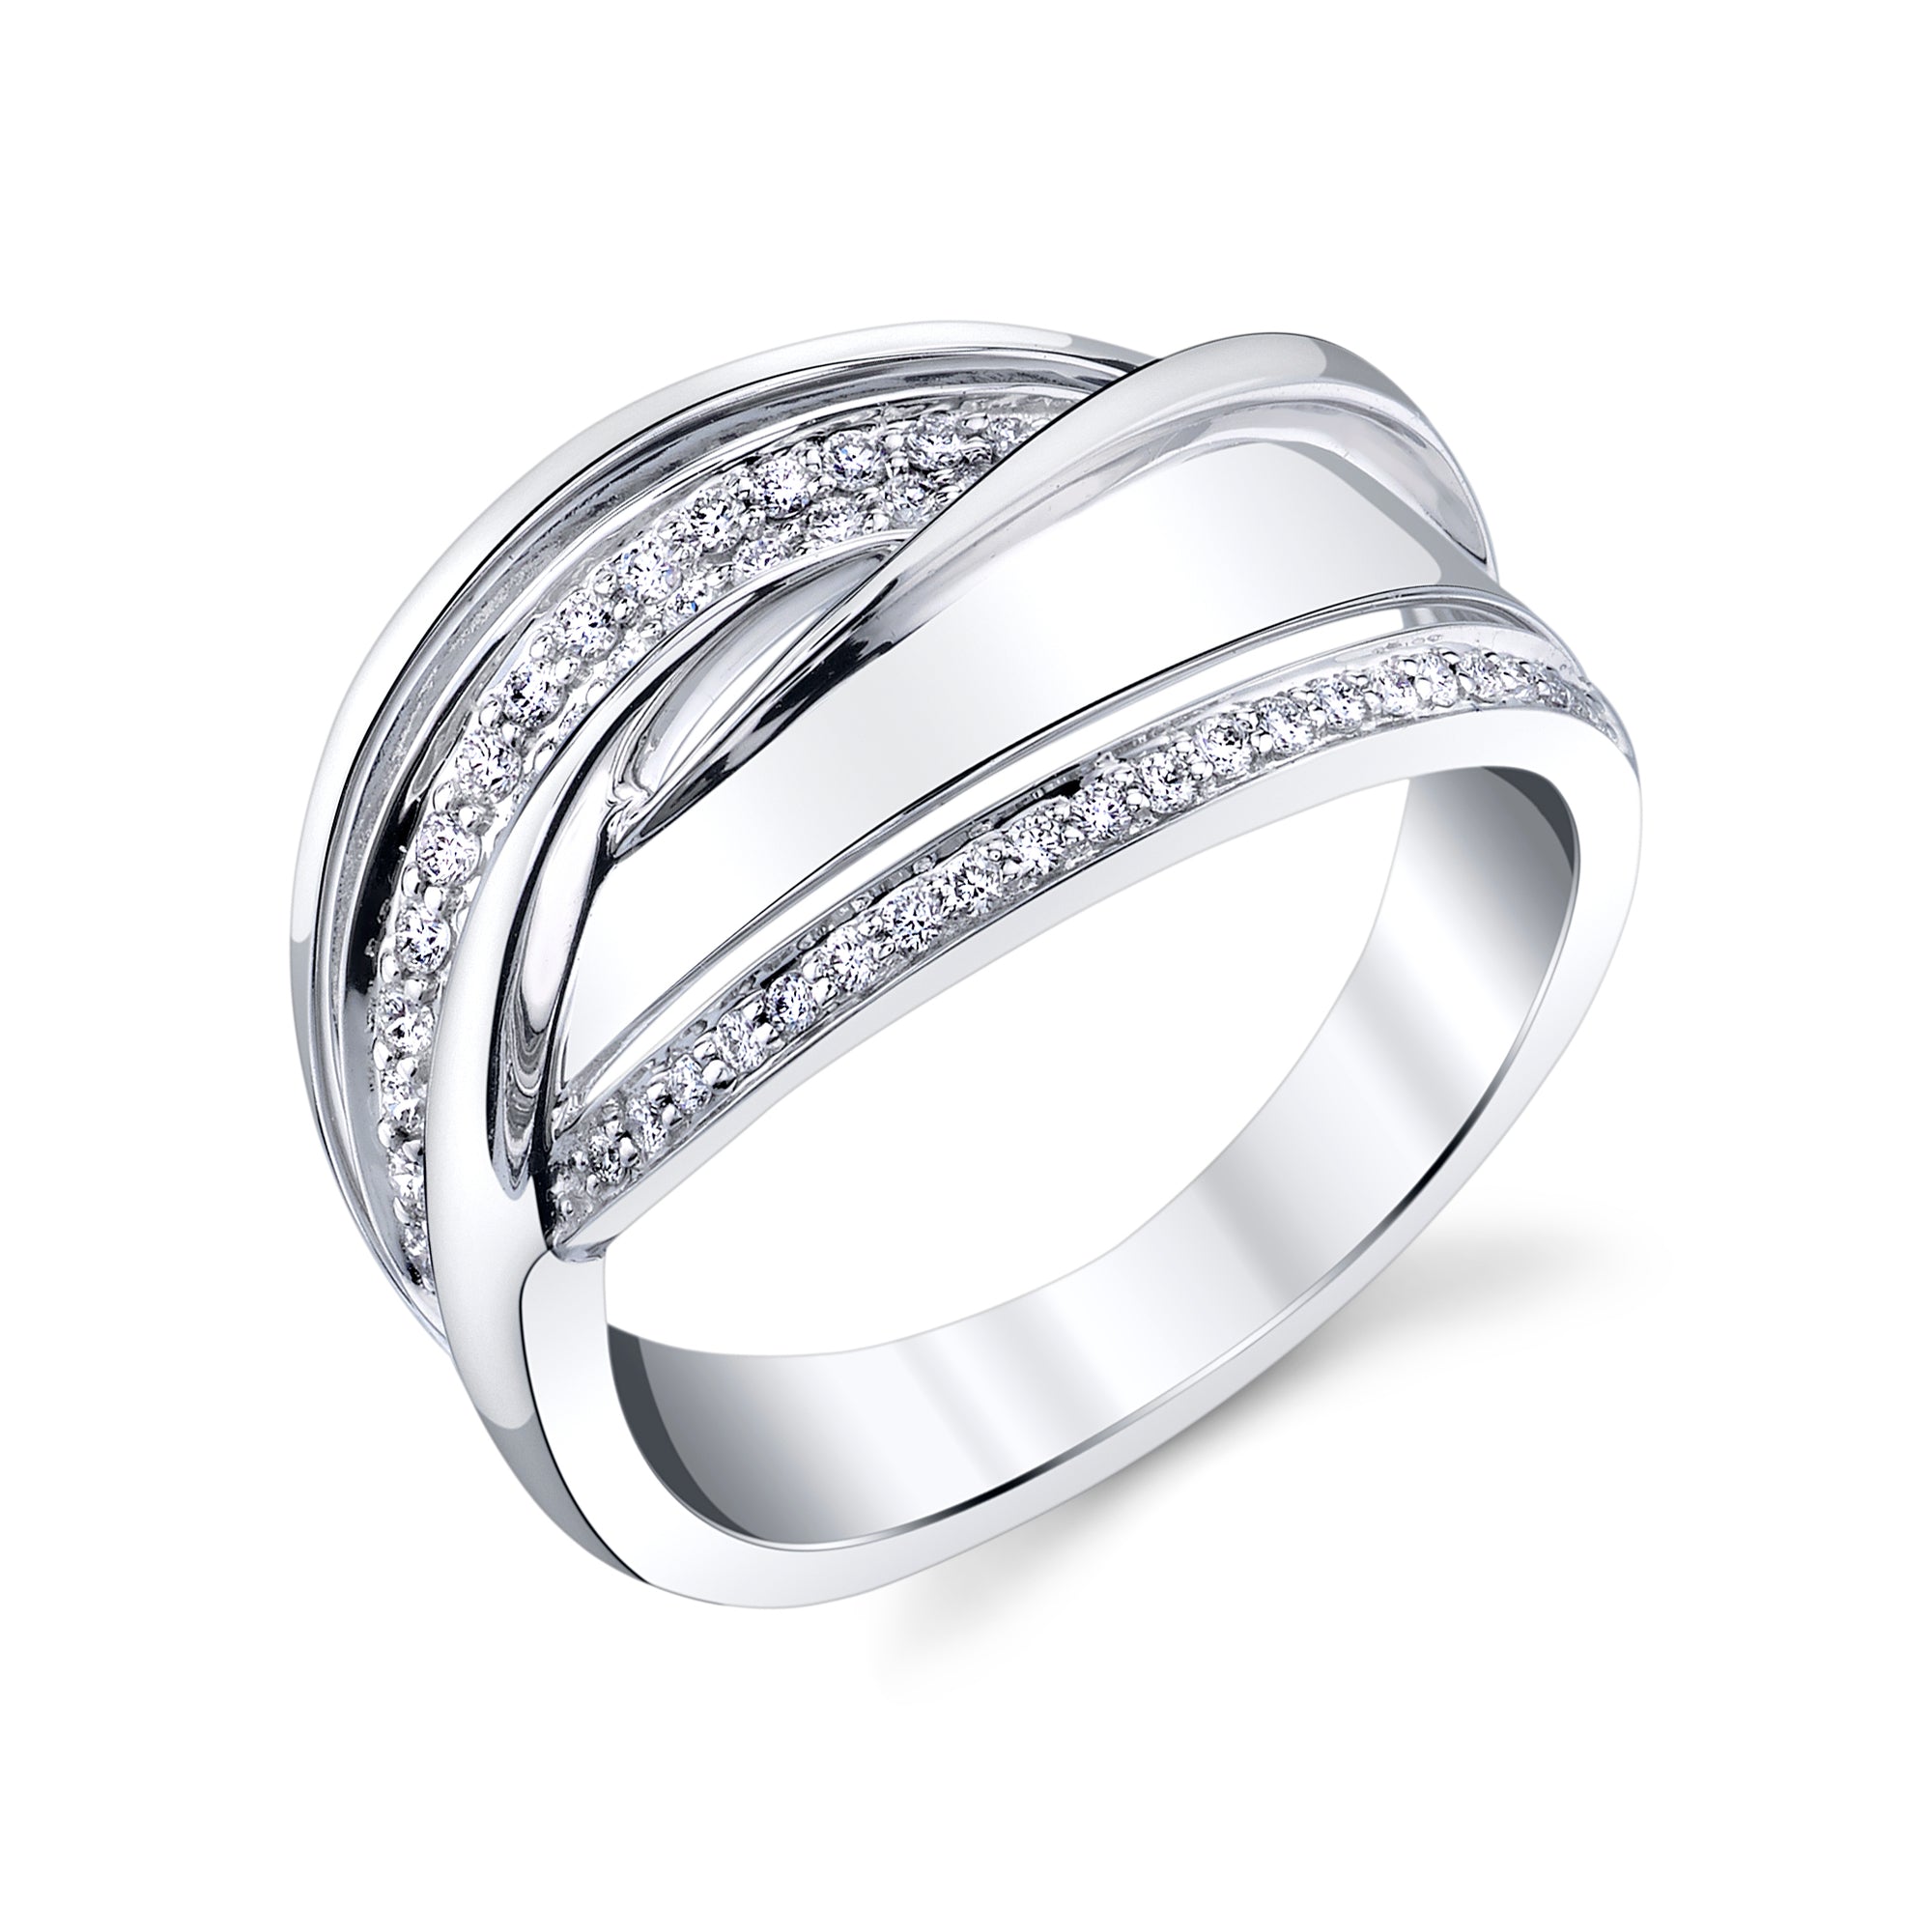 Get the Perfect Women's 950 Platinum Wedding Rings | GLAMIRA.in